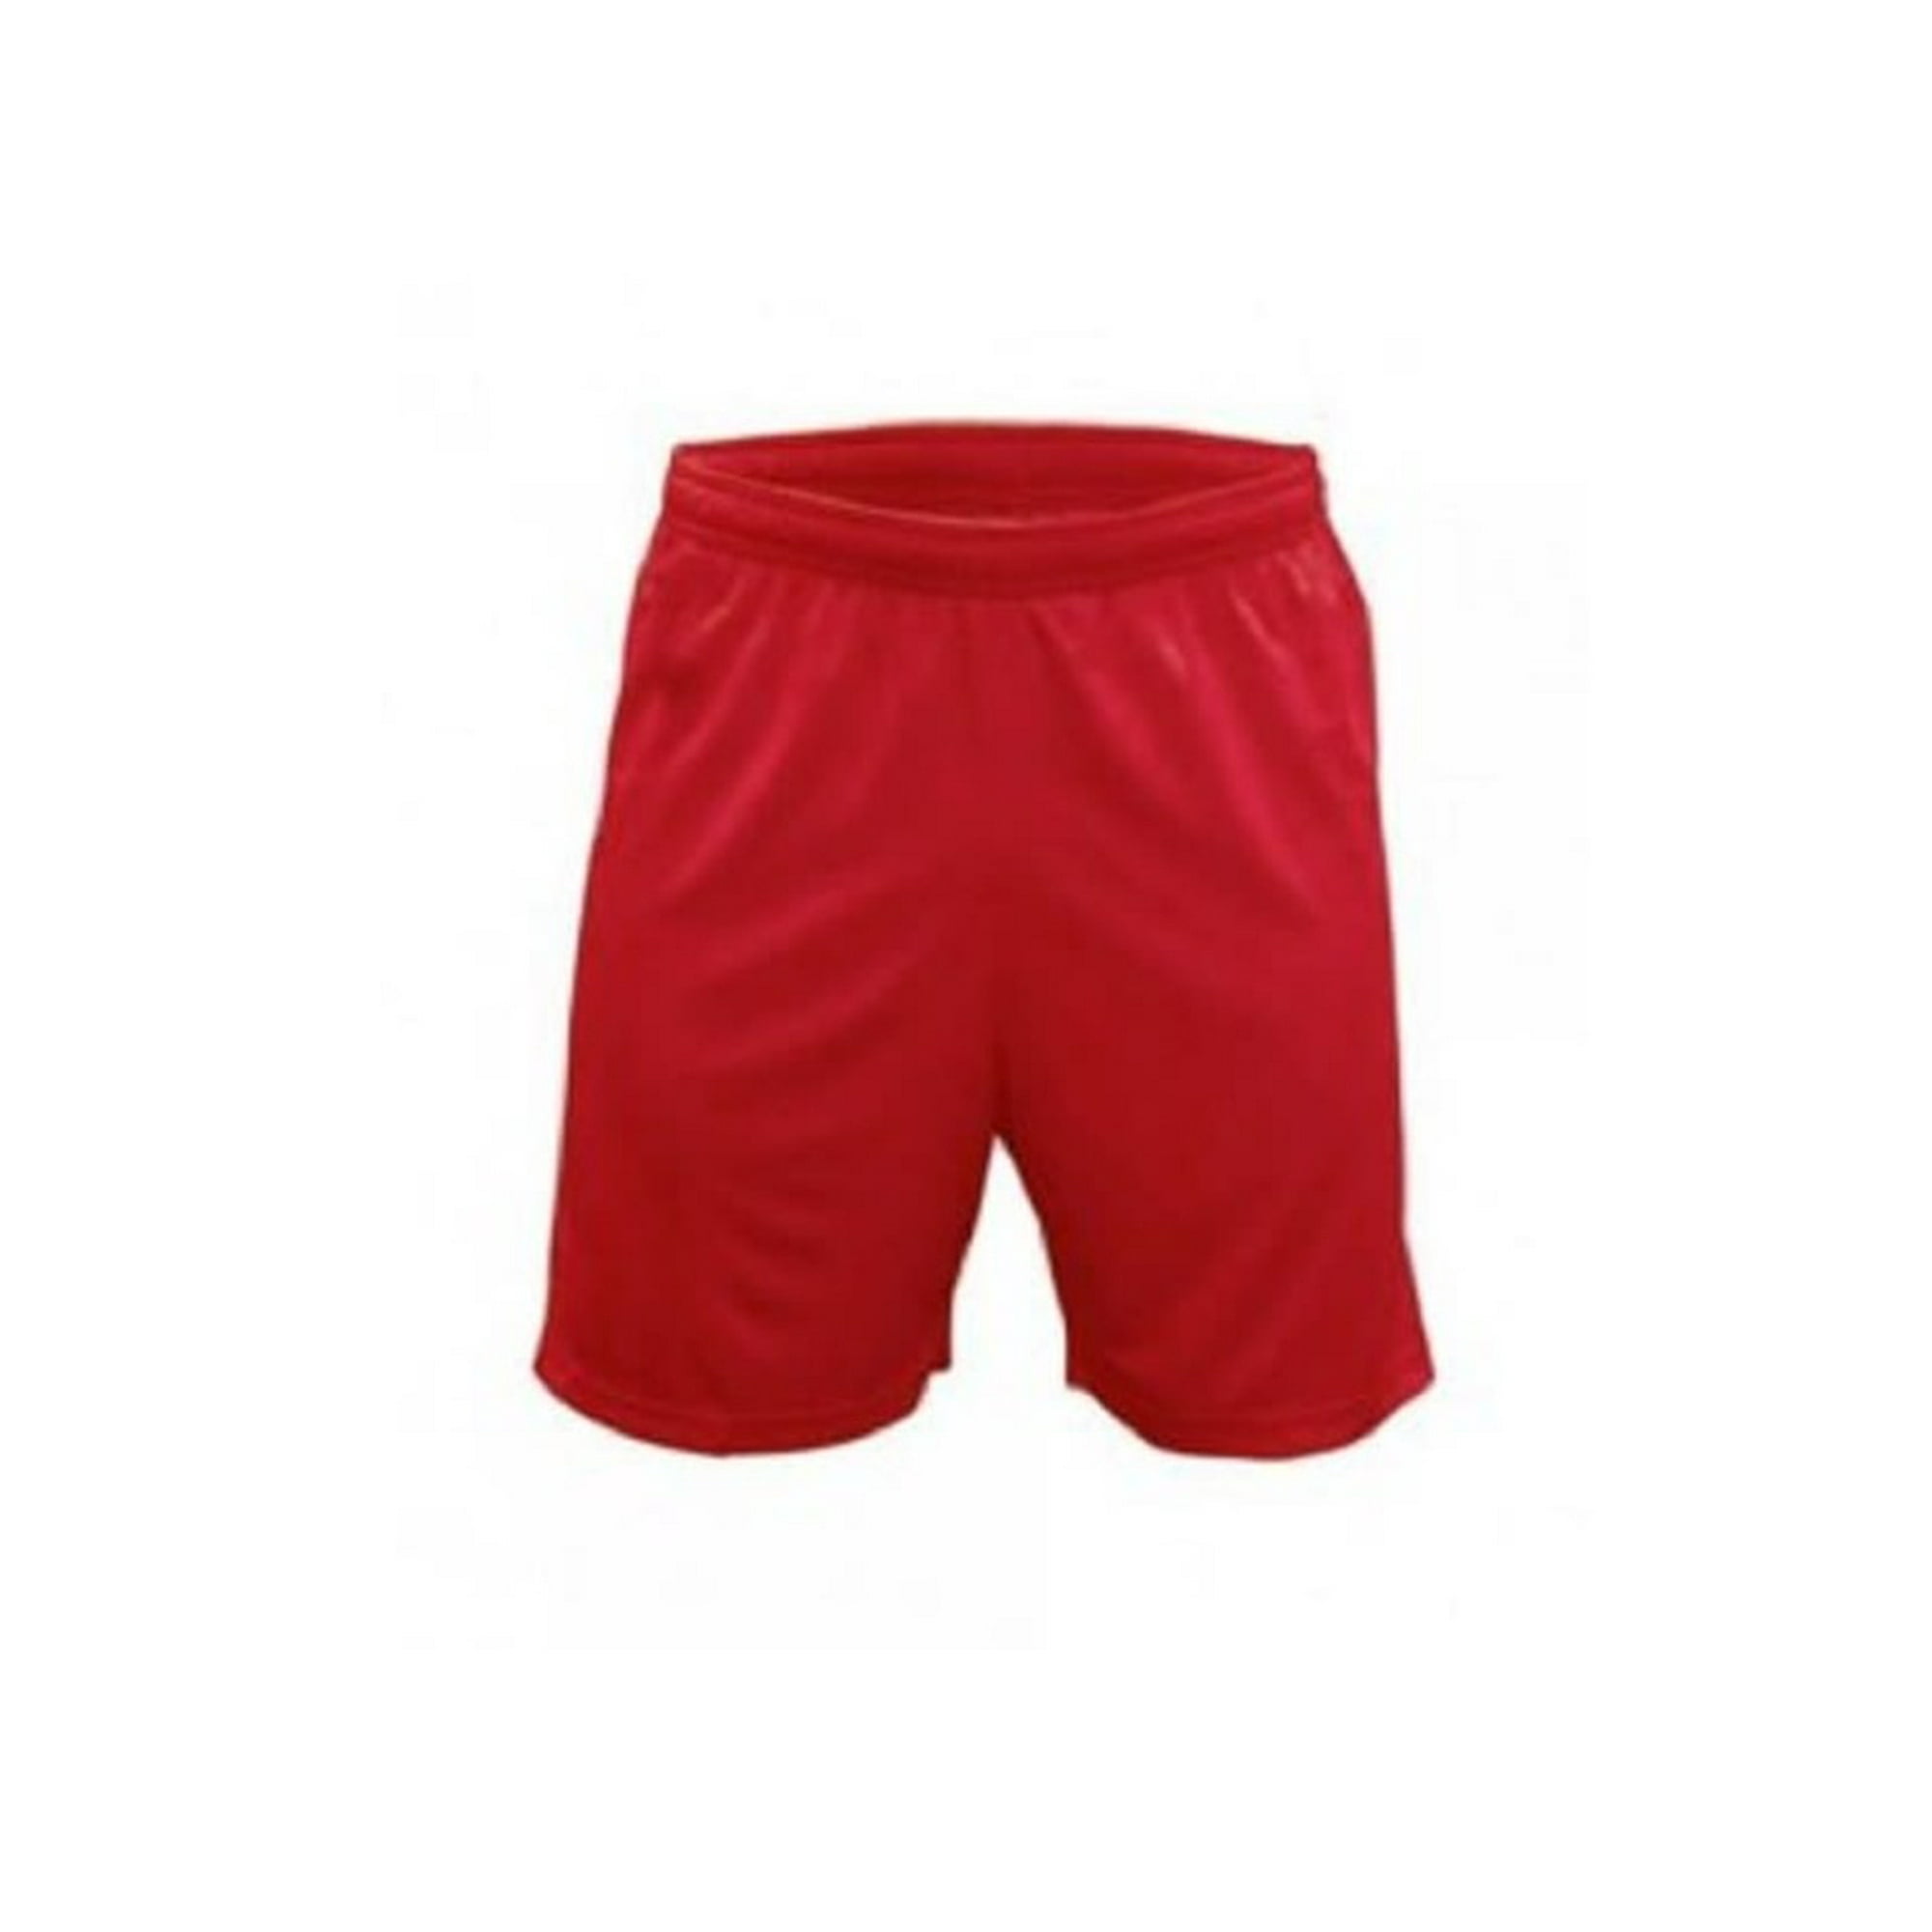 Short De Futbol Rojo Liso Costuras Reforzadas Talla L